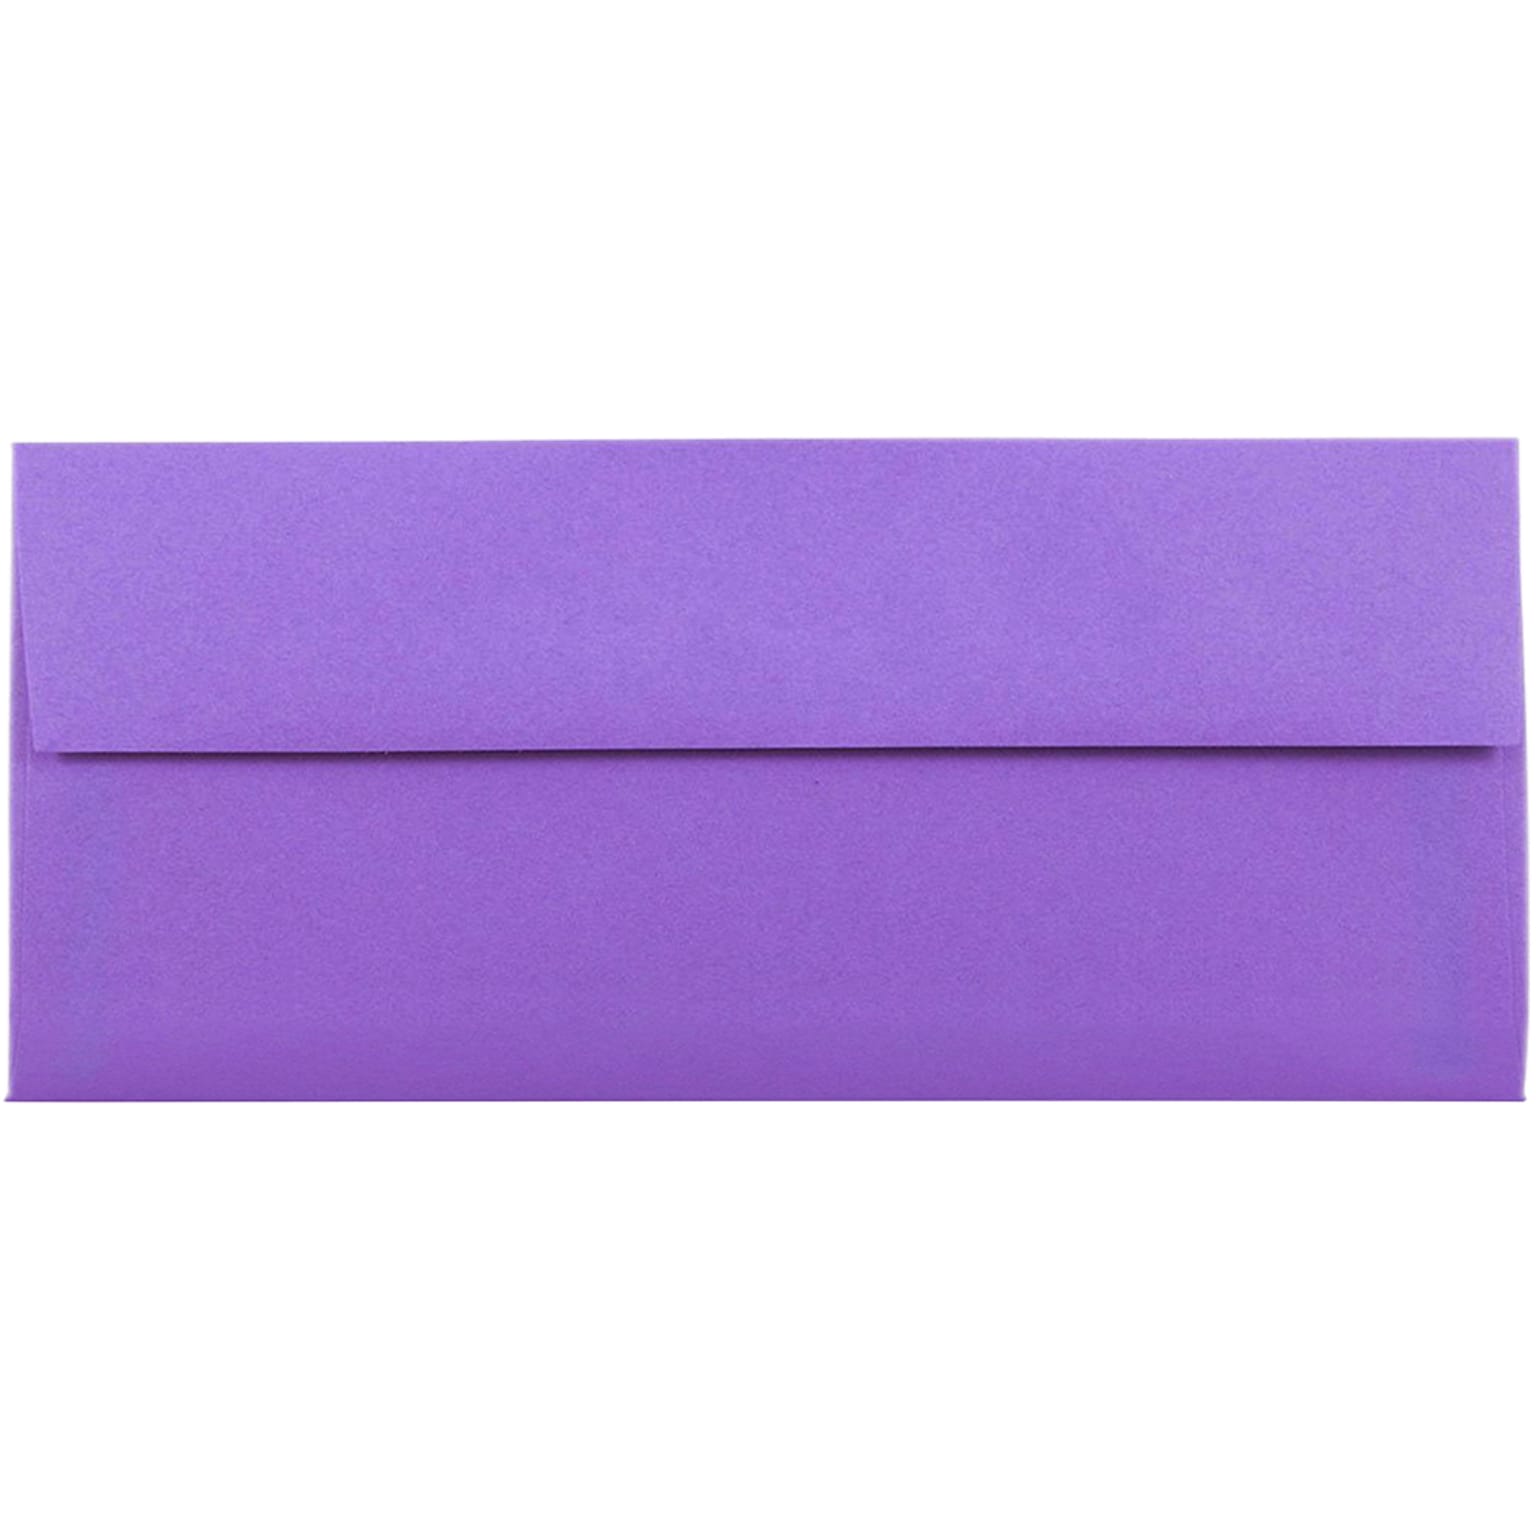 JAM Paper #10 Business Envelope, 4 1/8 x 9 1/2, Violet Purple, 25/Pack (15864)